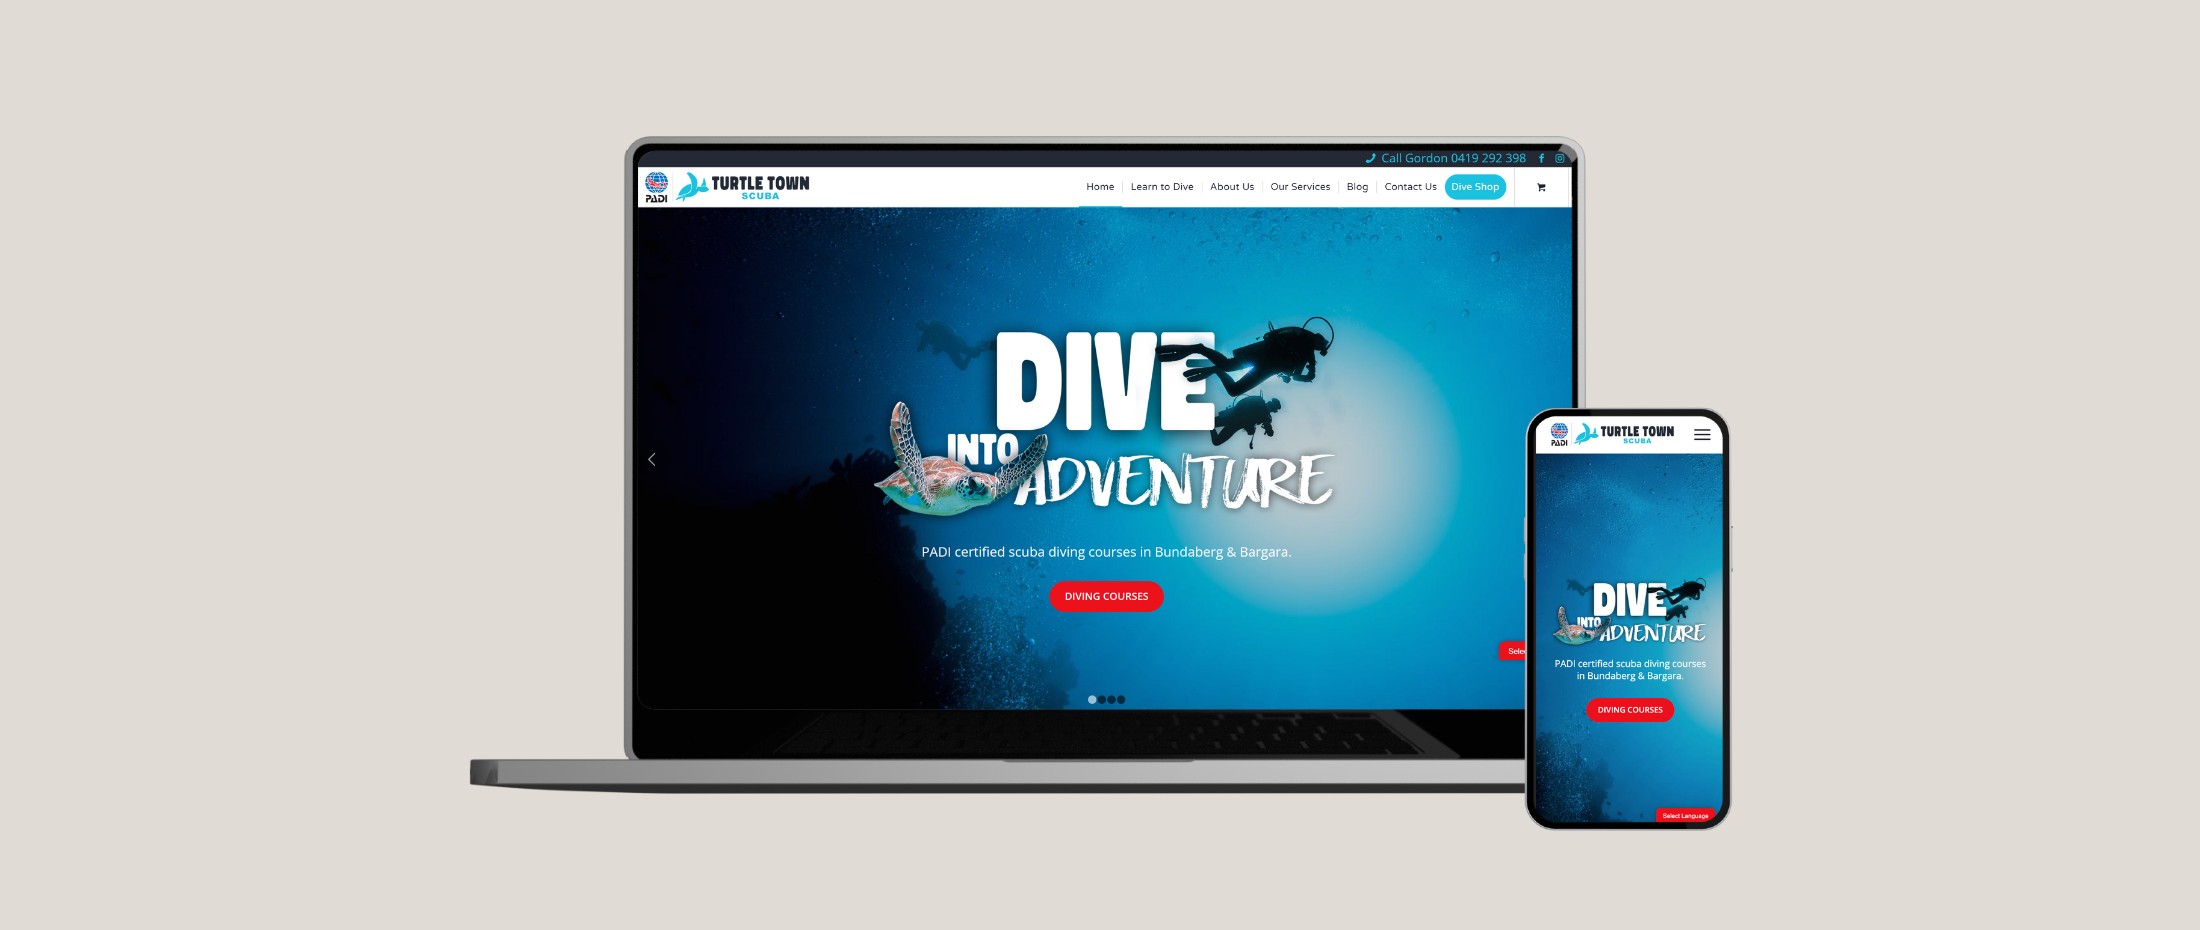 Turtle Town Scuba Diving PADI Certified - Done Digital Marketing - Brisbane Australia